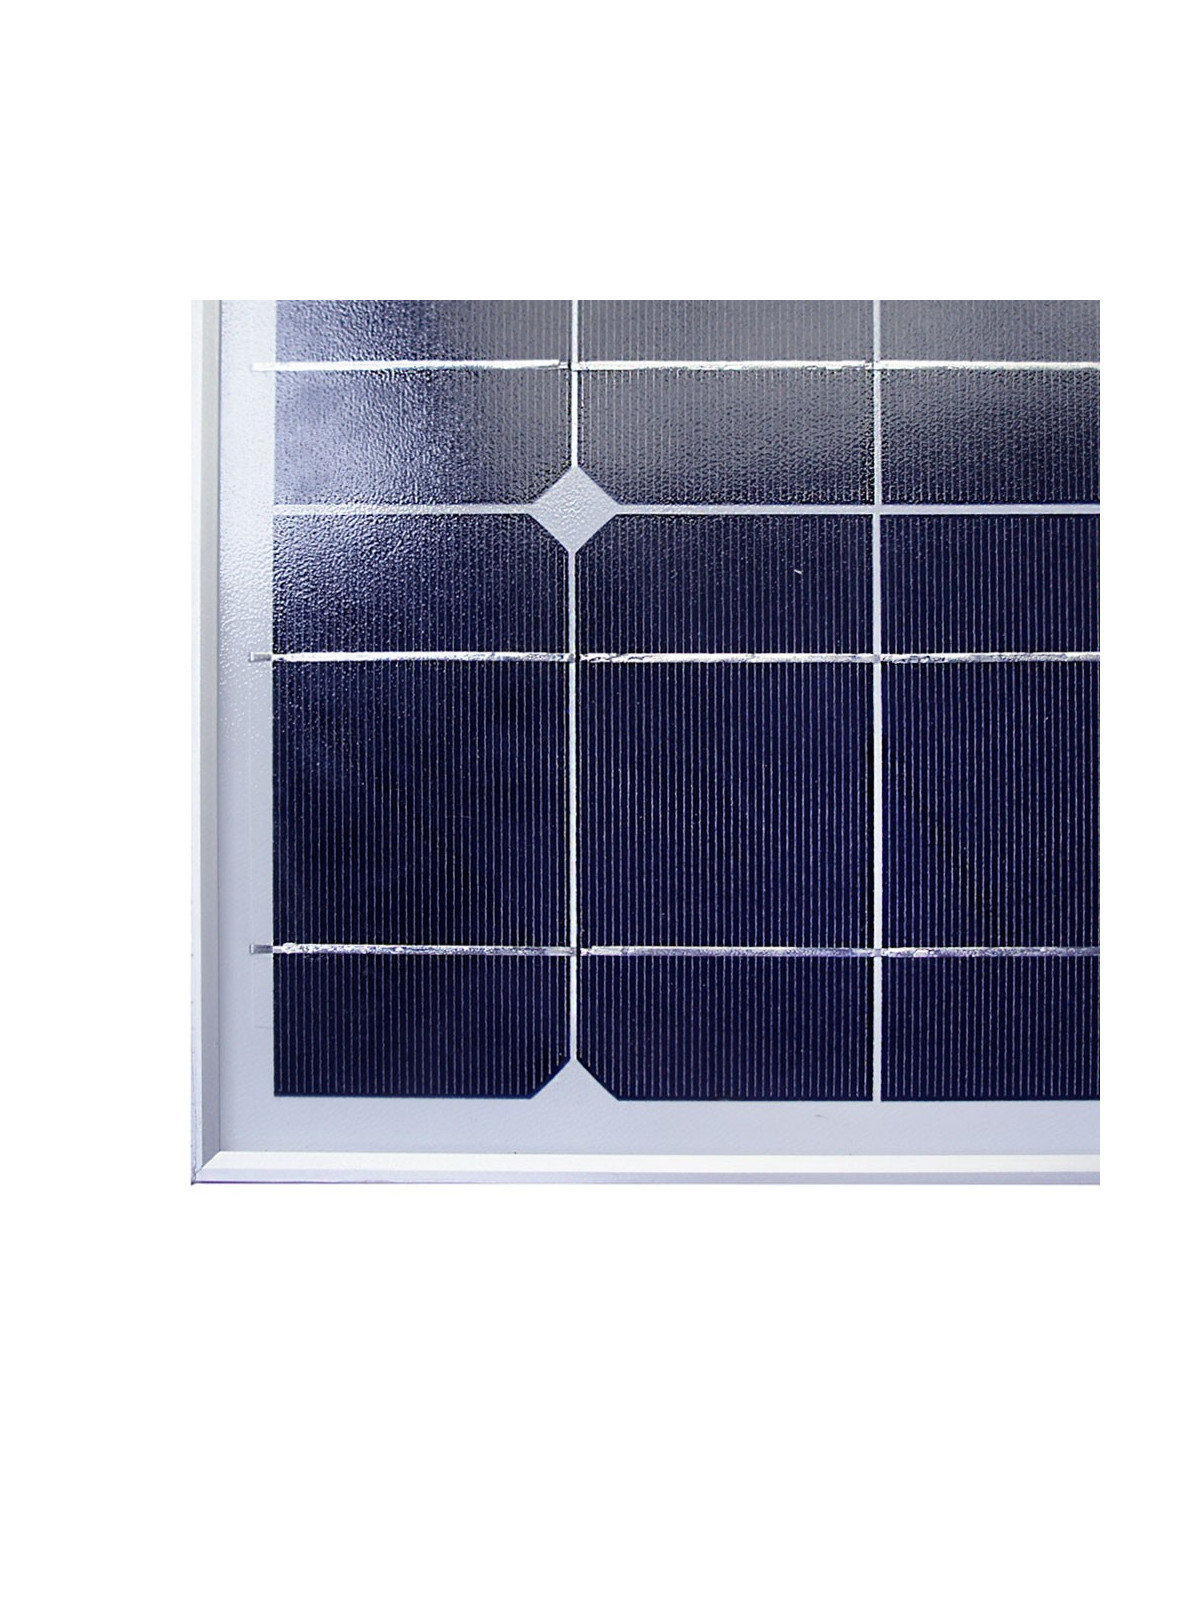 Orientierbares 50Wp-Photovoltaikmodul